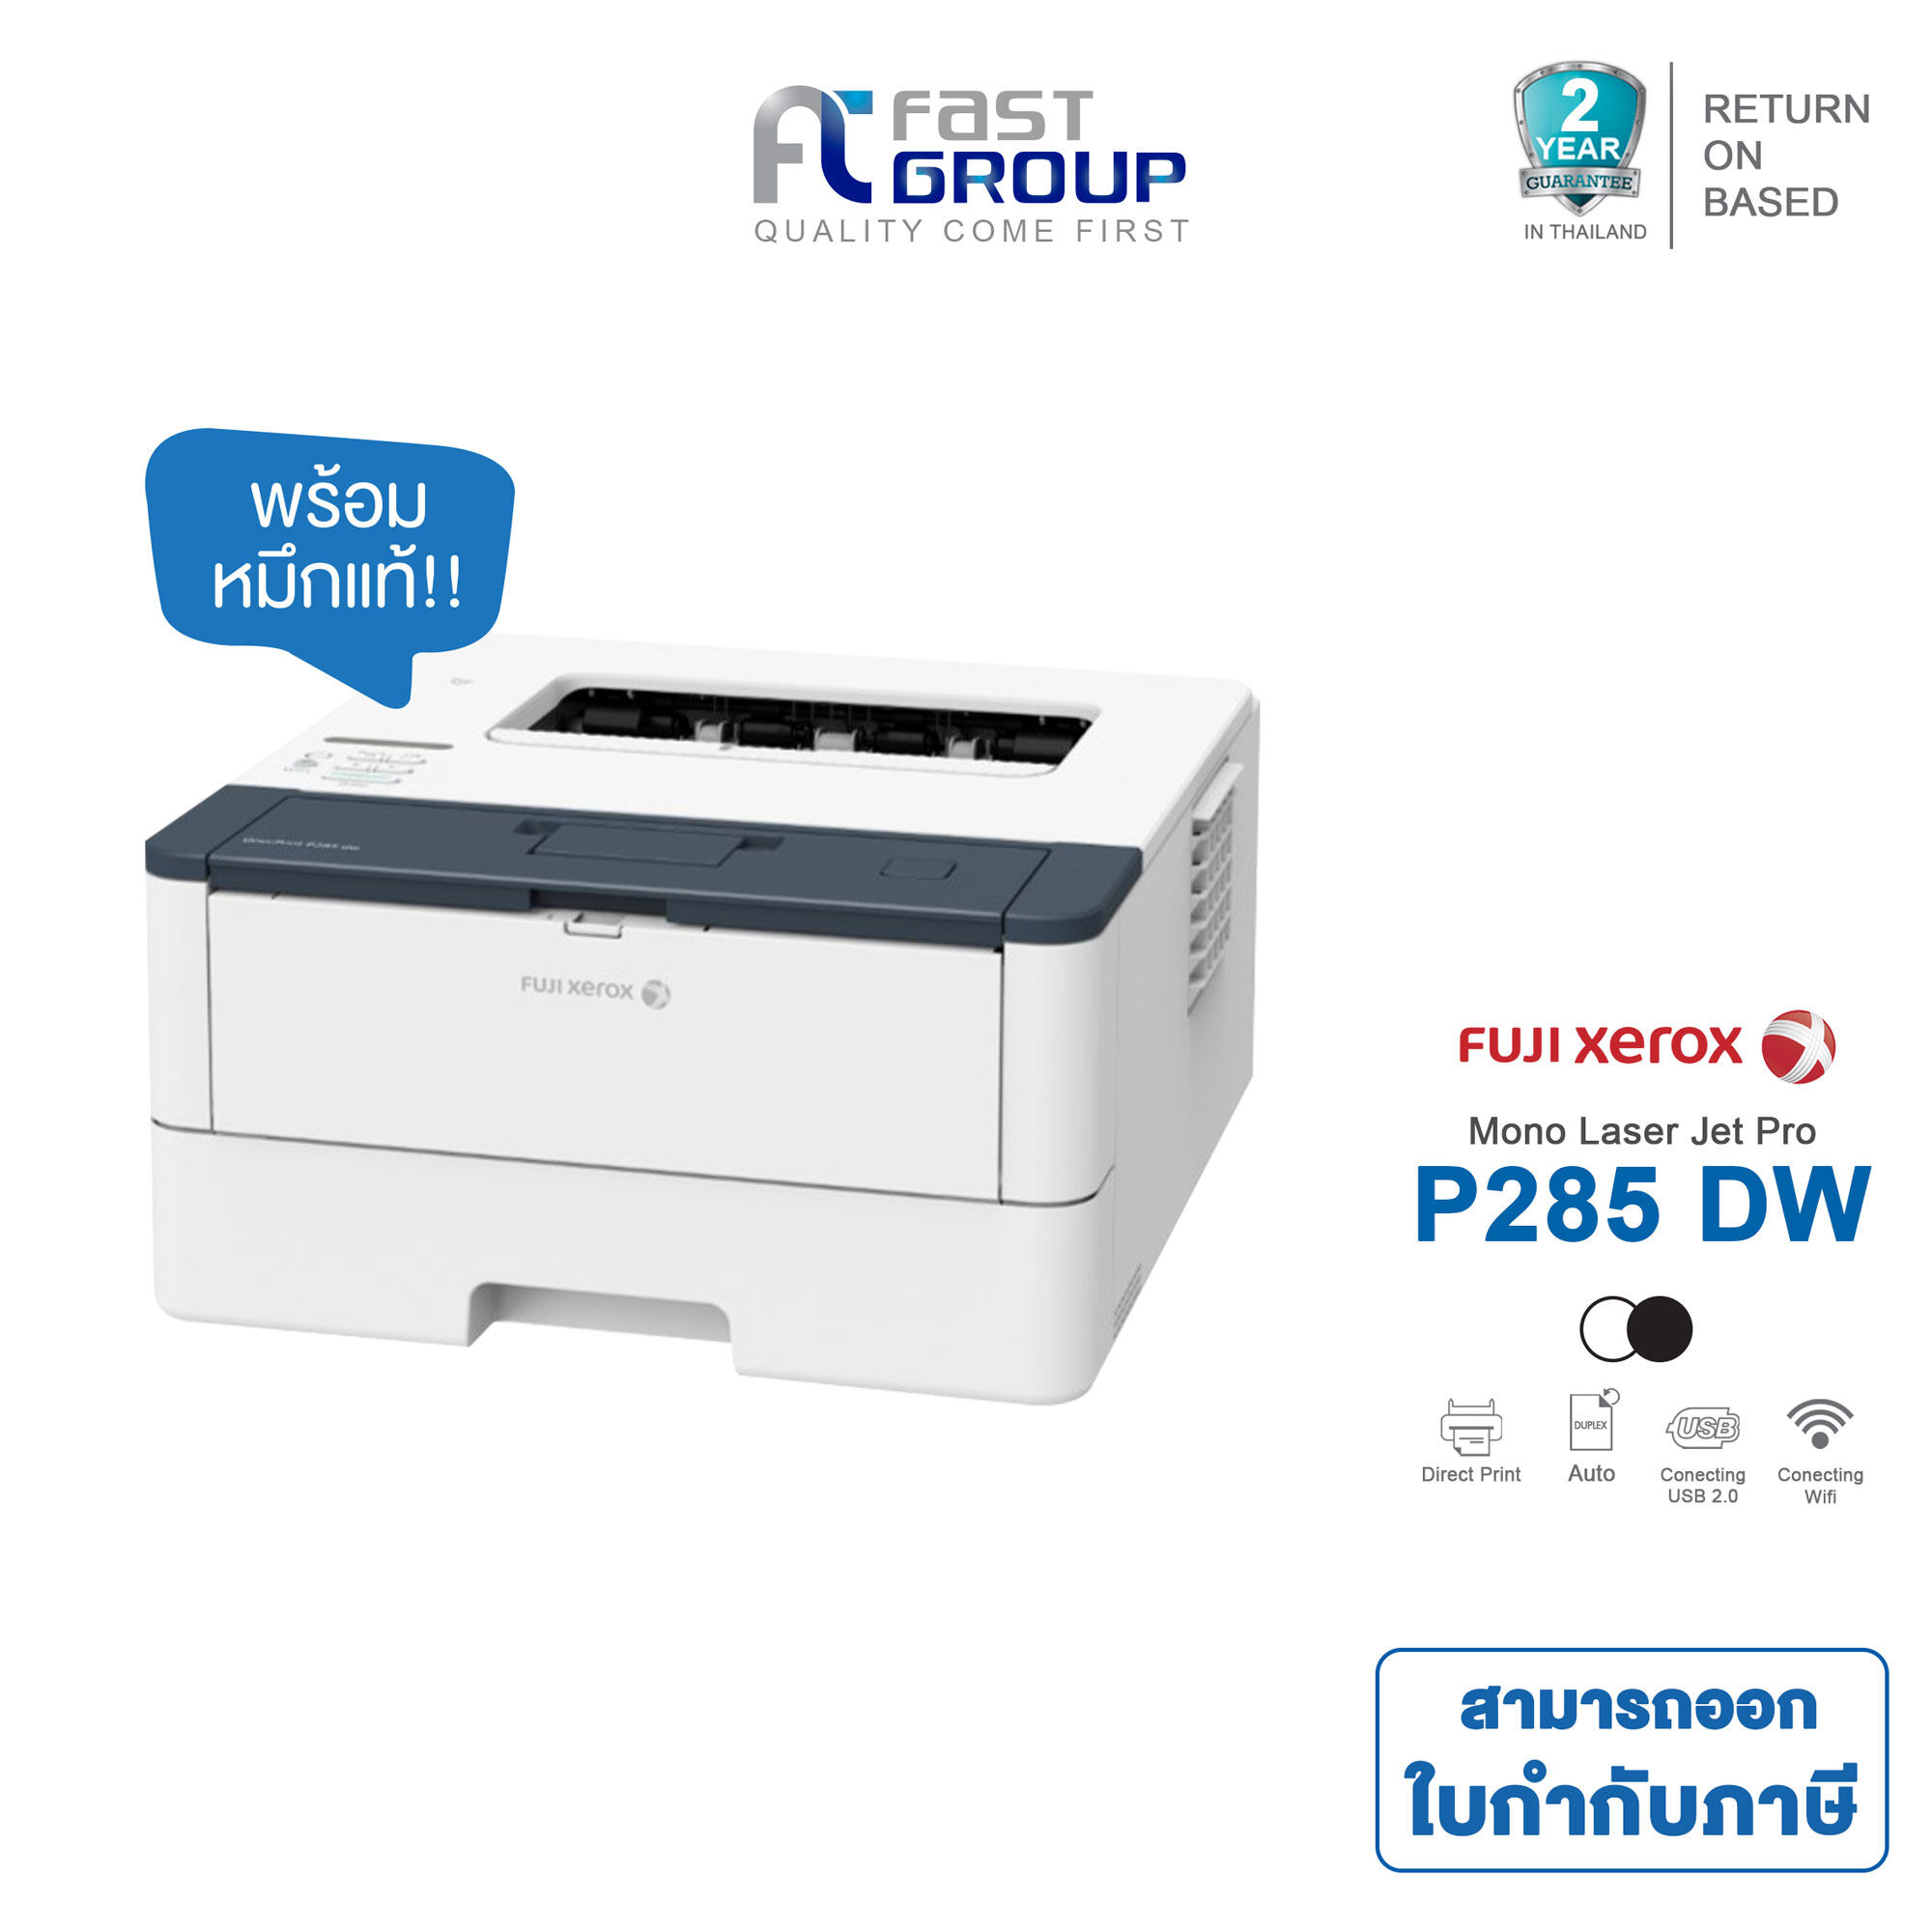 Fuji Xerox DocuPrint P285dw Laser Printer deluxe